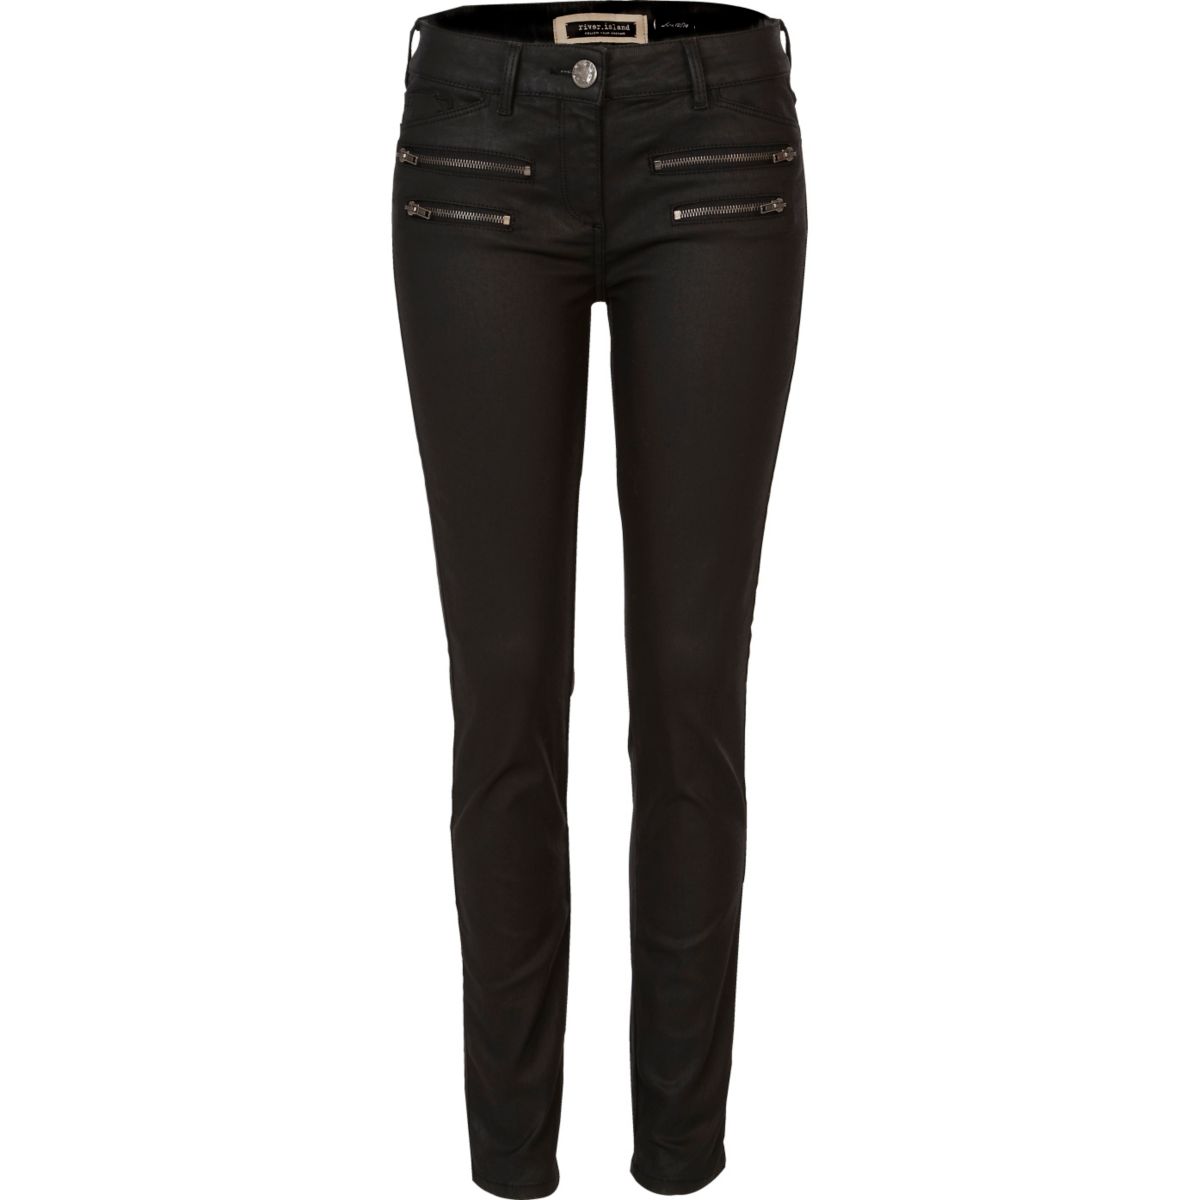 Black coated zip super skinny jeans - Jeans - Sale - women